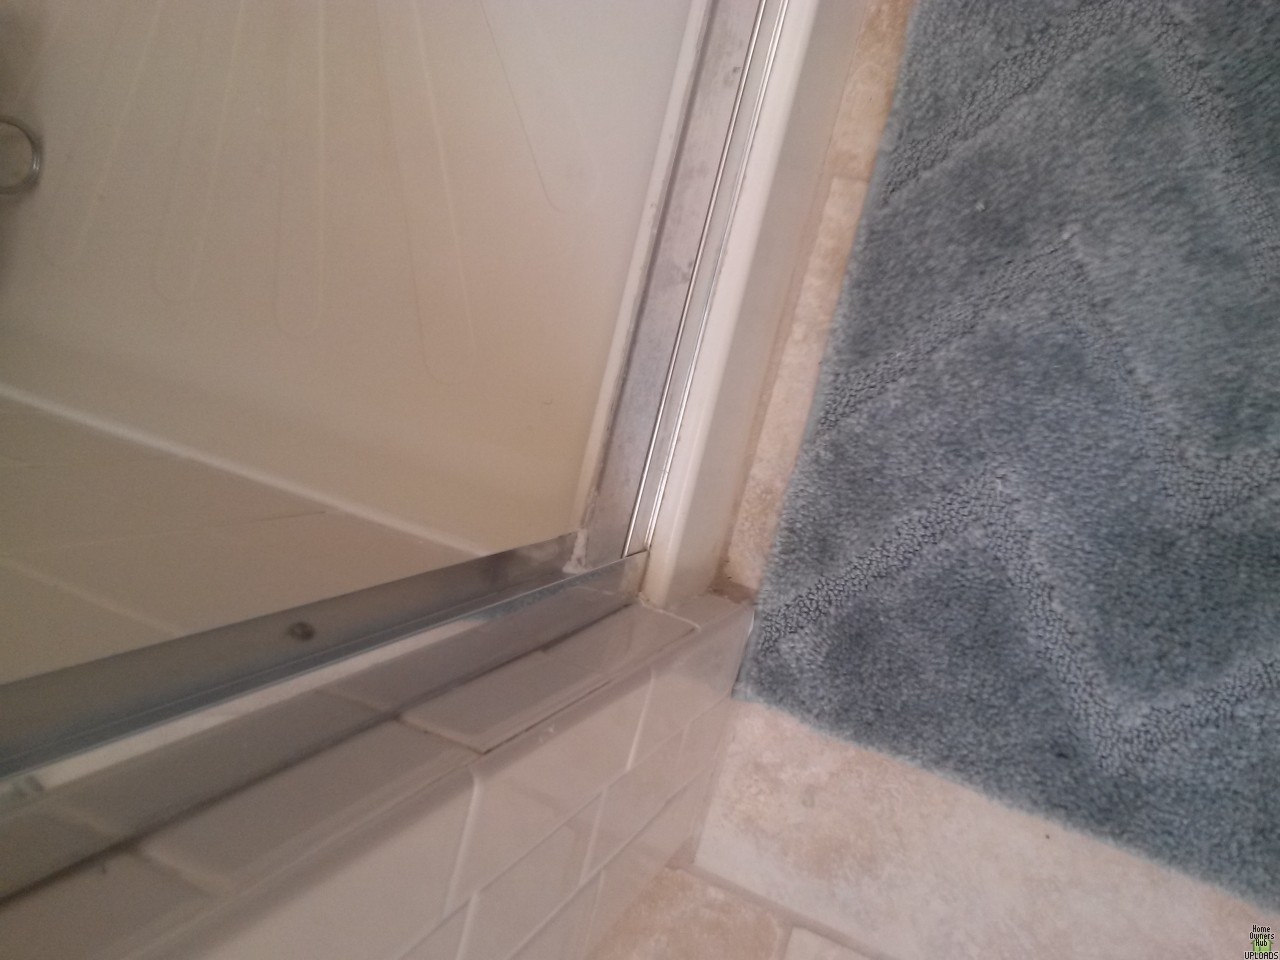 Image for disconcerting shower pan leak